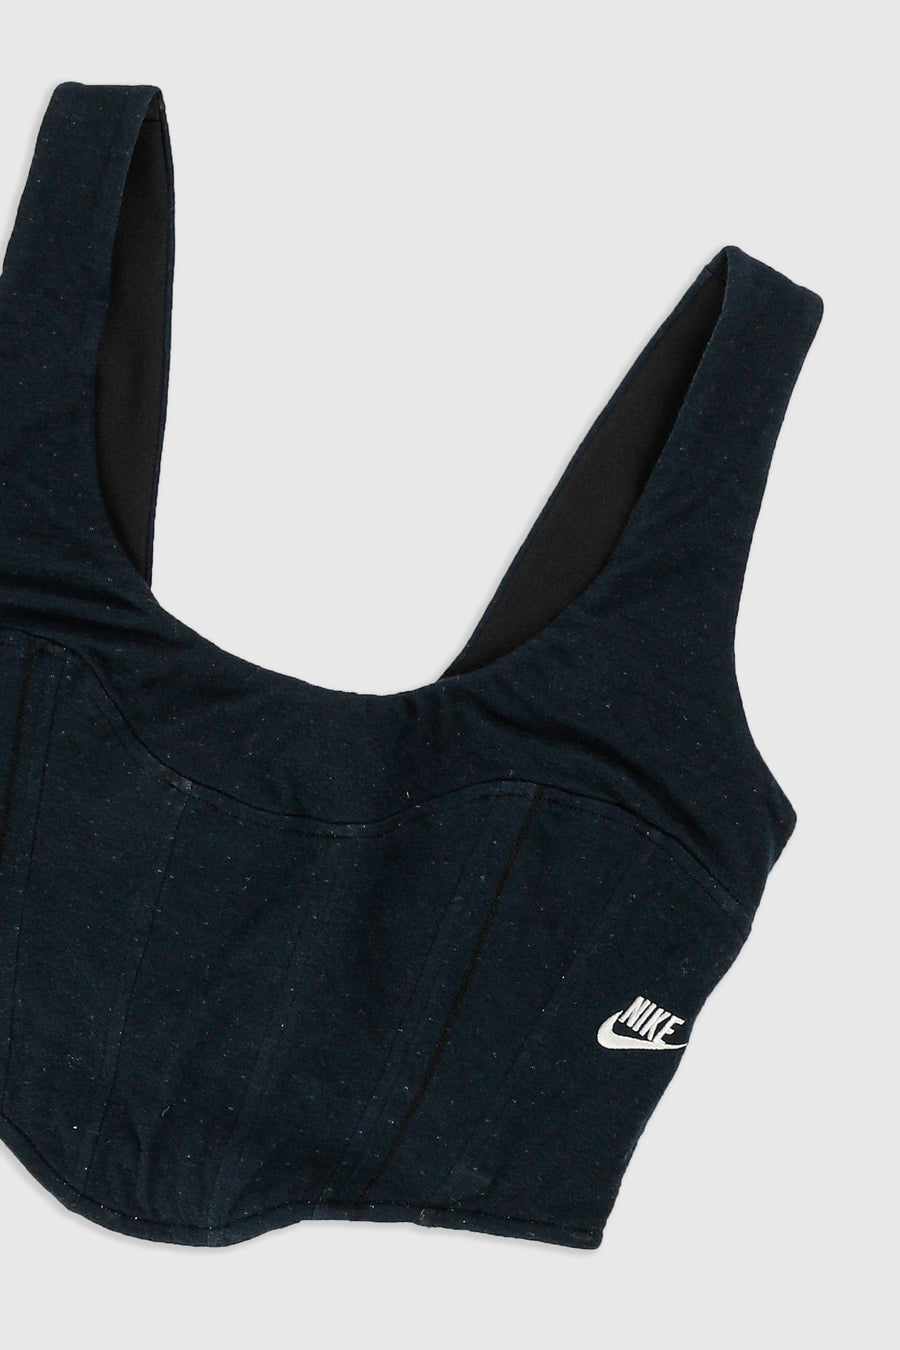 Rework Nike Sweatshirt Bustier - S